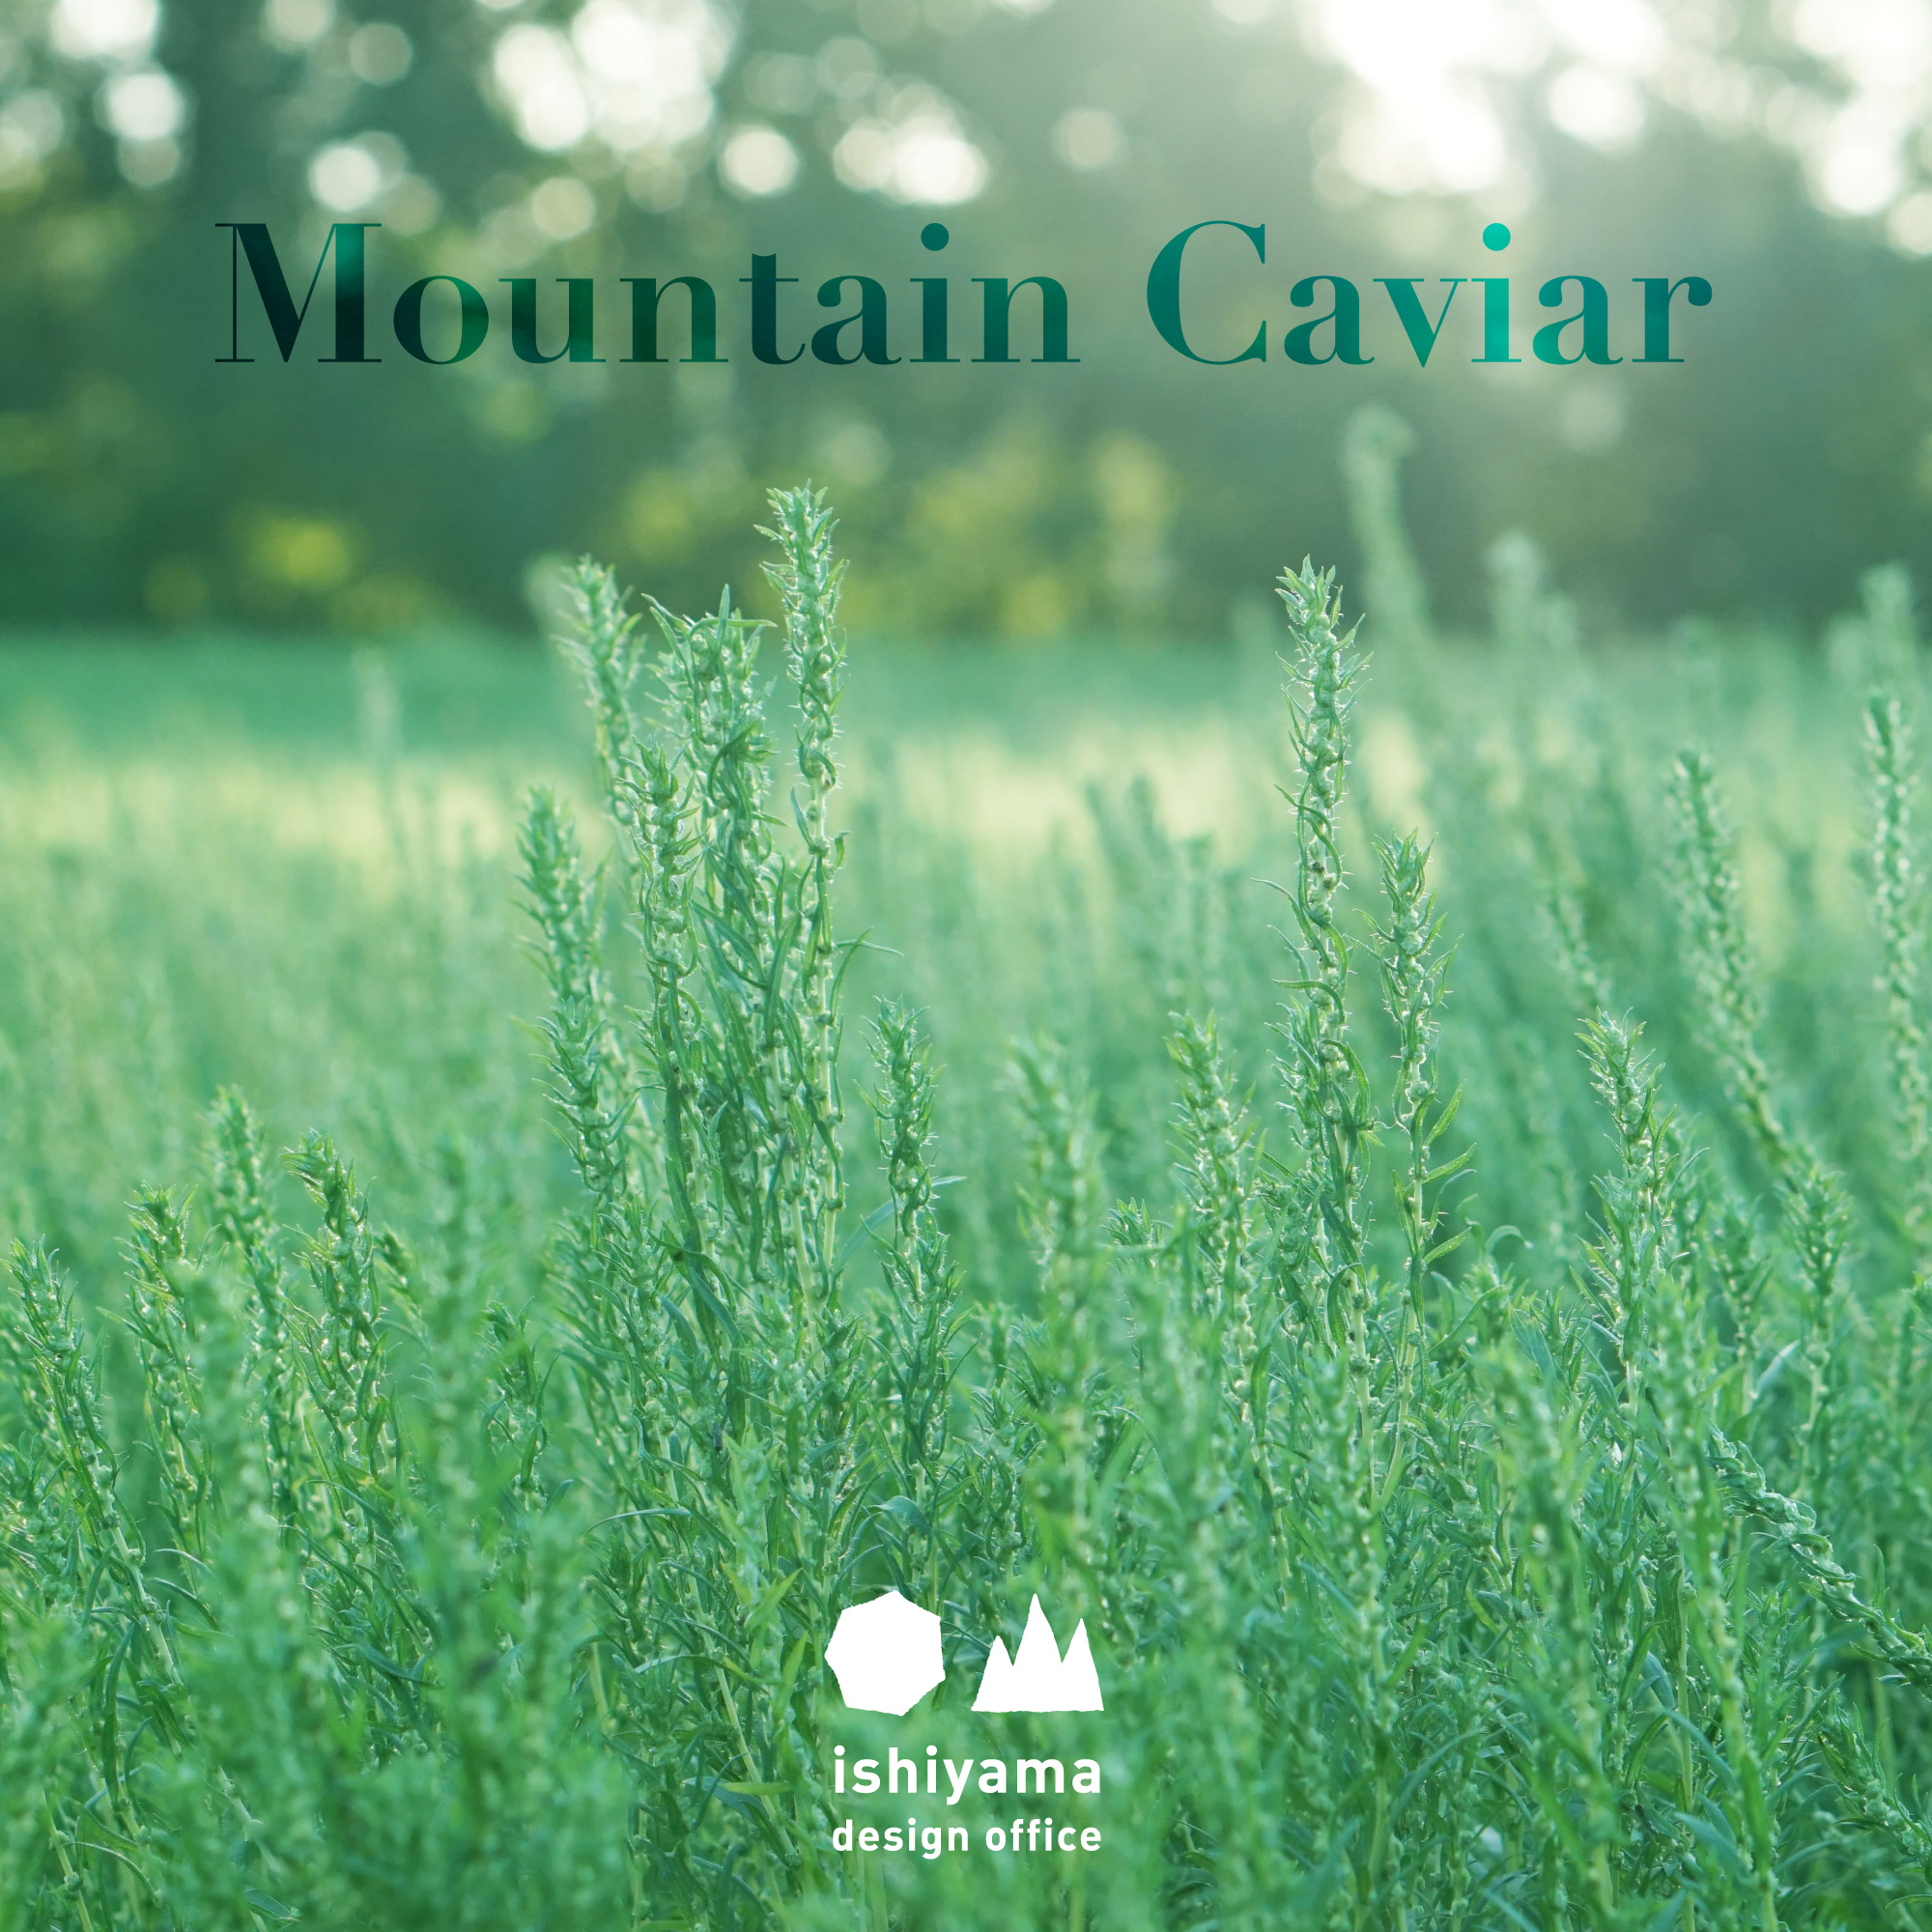 9月 Mountain Caviar